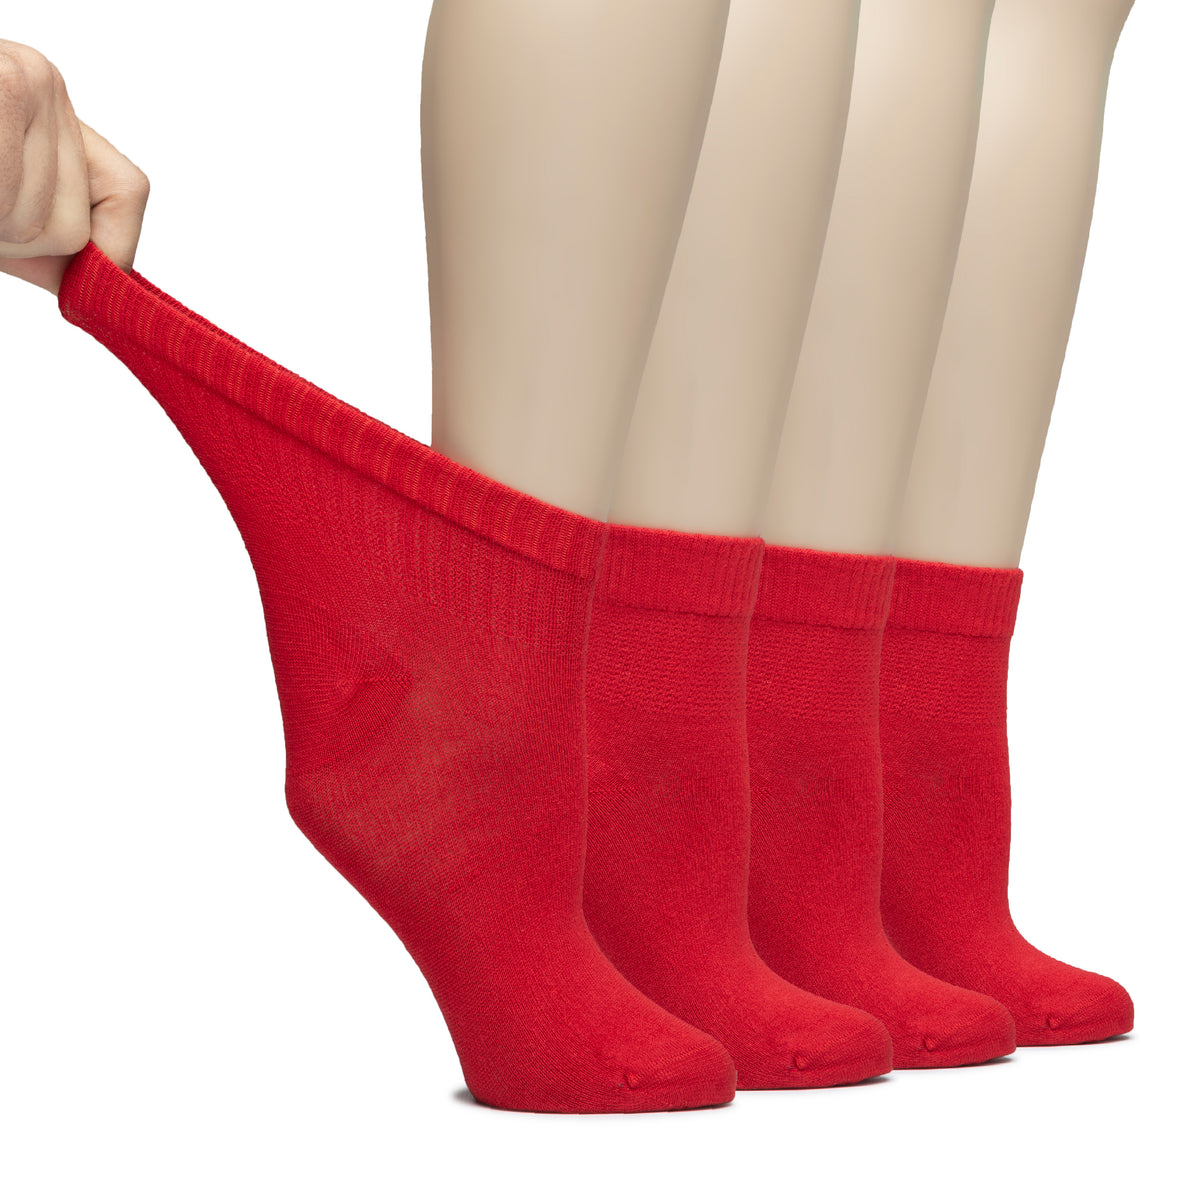 Hugh Ugoli Lightweight Women's Diabetic Ankle Socks Bamboo Thin Socks Seamless Toe and Non-Binding Top, 4 Pairs, , Shoe Size: 6-9/10-12 | Shoe Size: 10-12 | Red